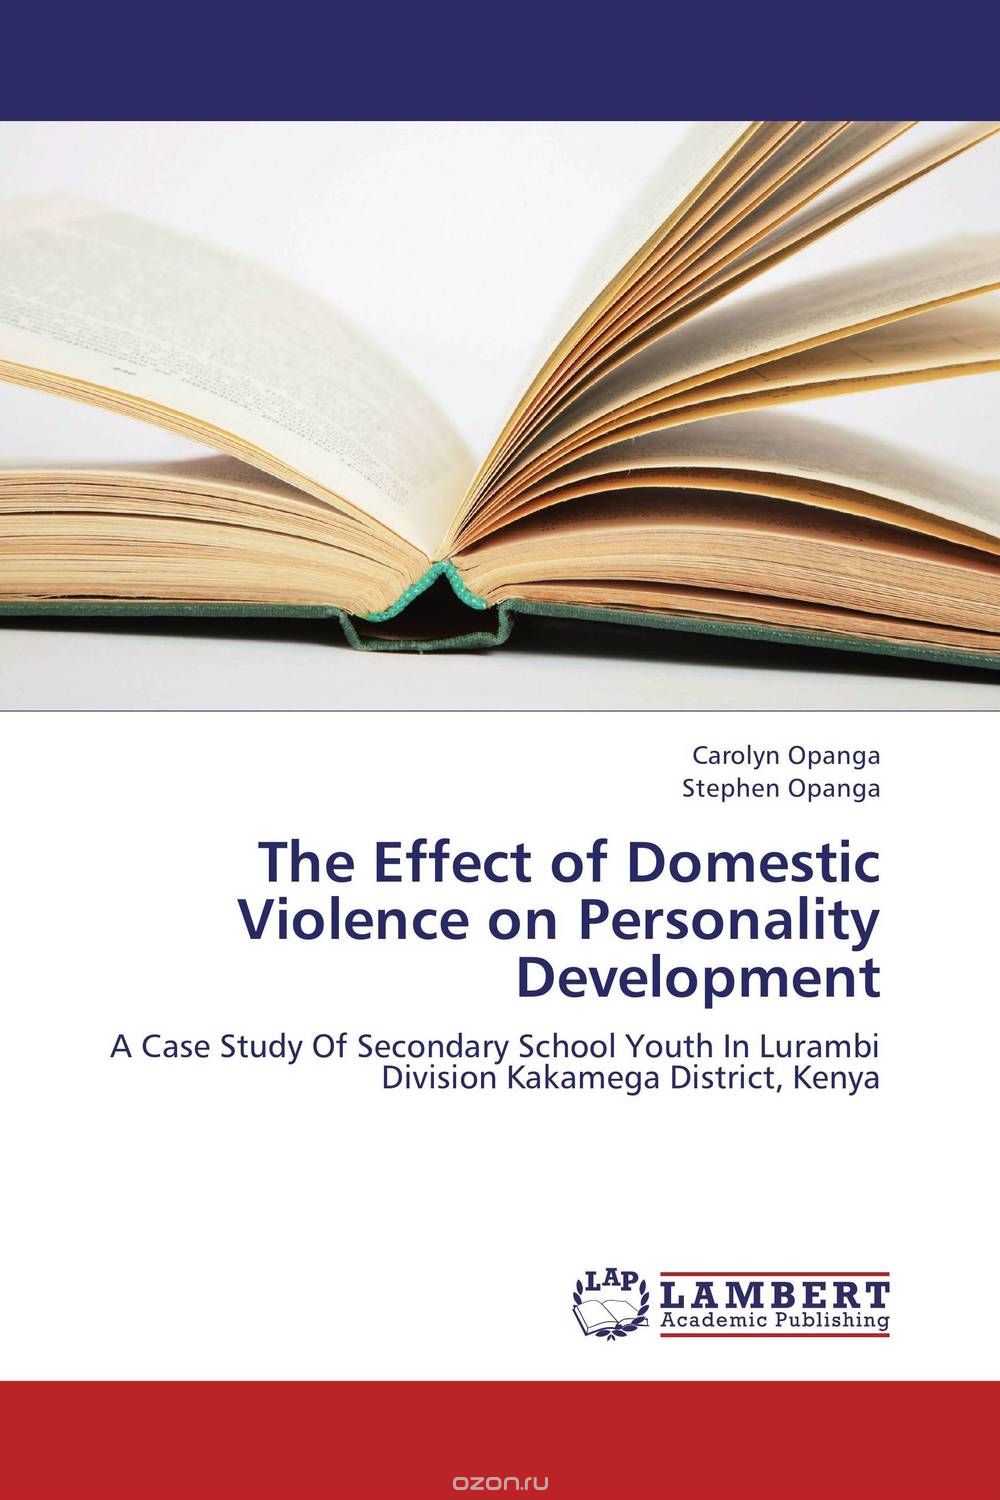 Скачать книгу "The Effect of Domestic Violence on Personality Development"